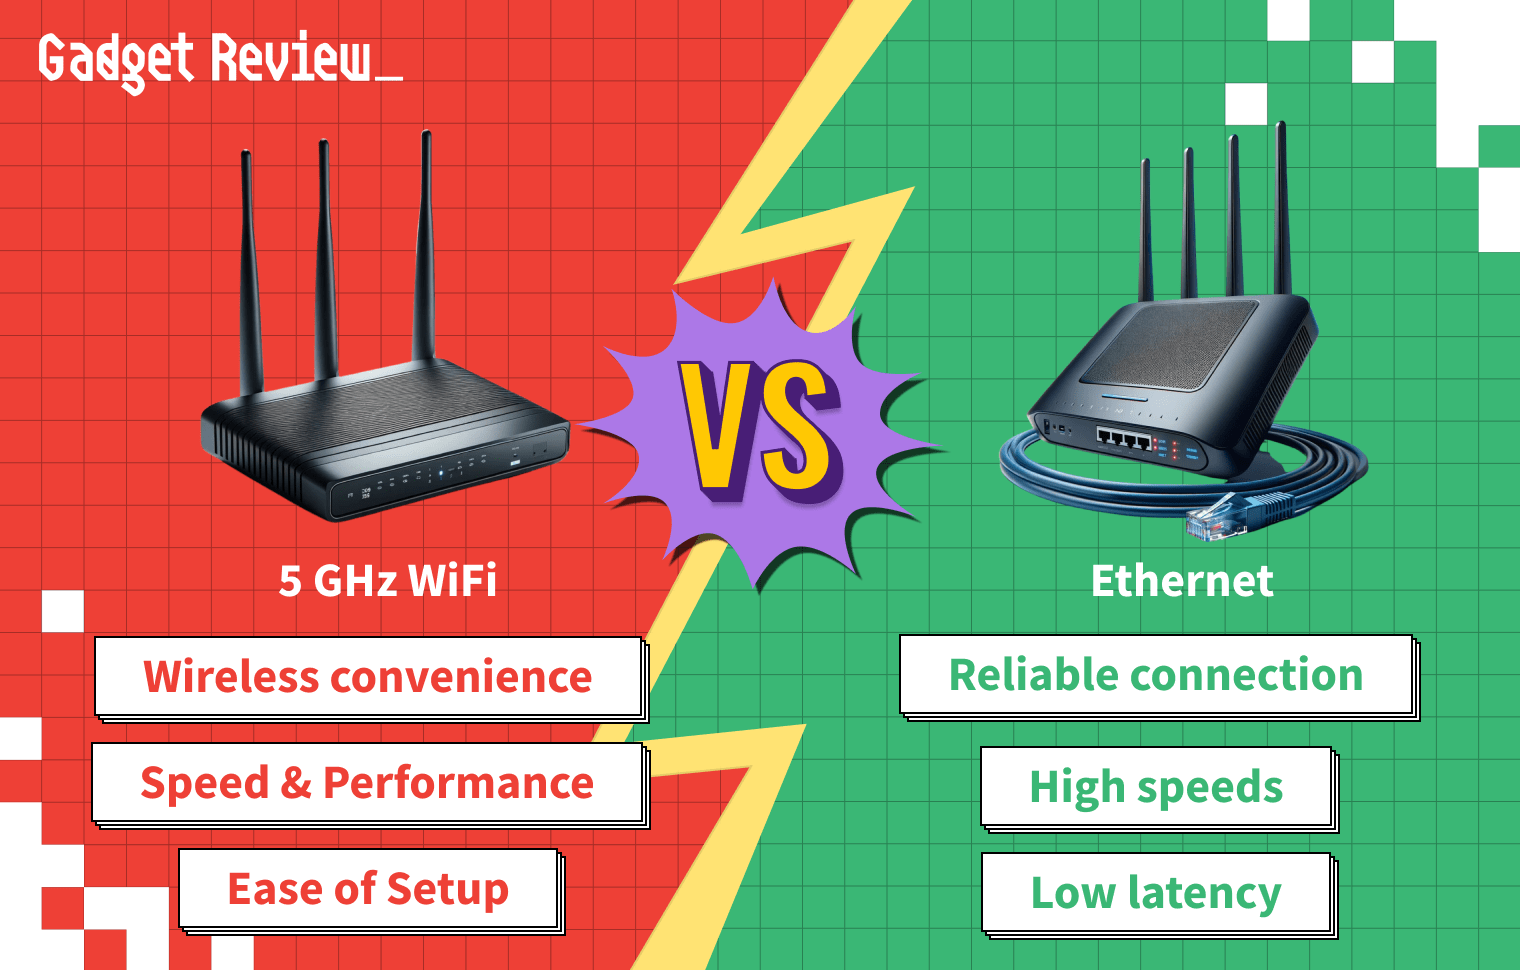 5GHz vs Ethernet for Gaming